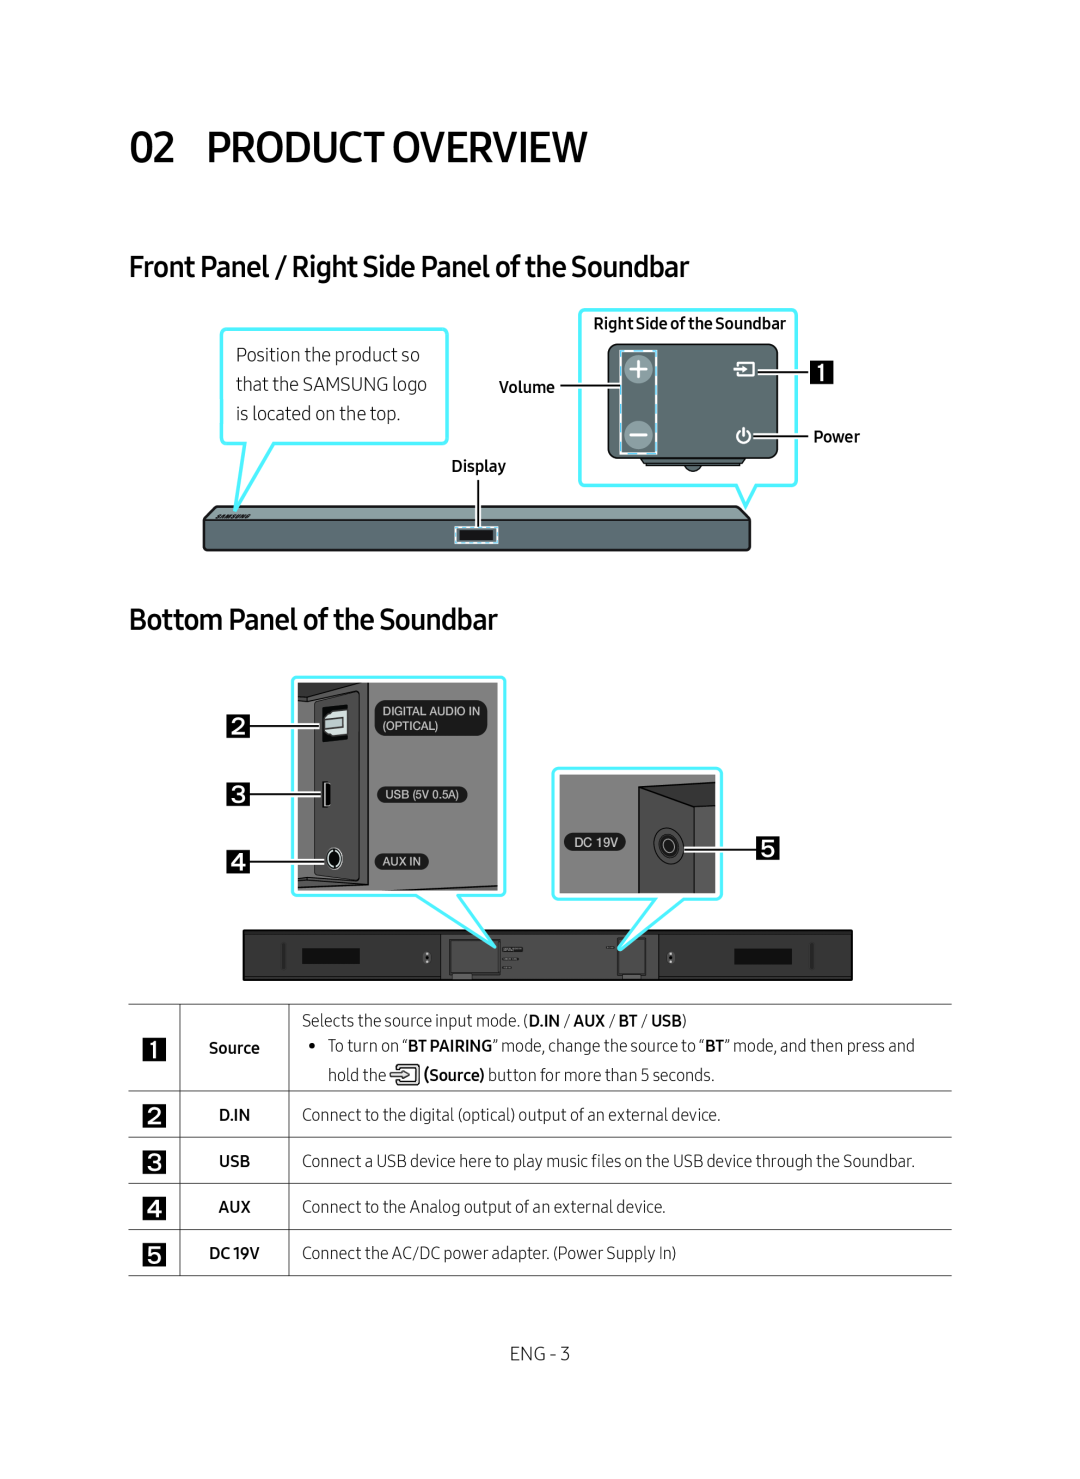 Front Panel / Right Side Panel of the Soundbar Standard HW-R40M